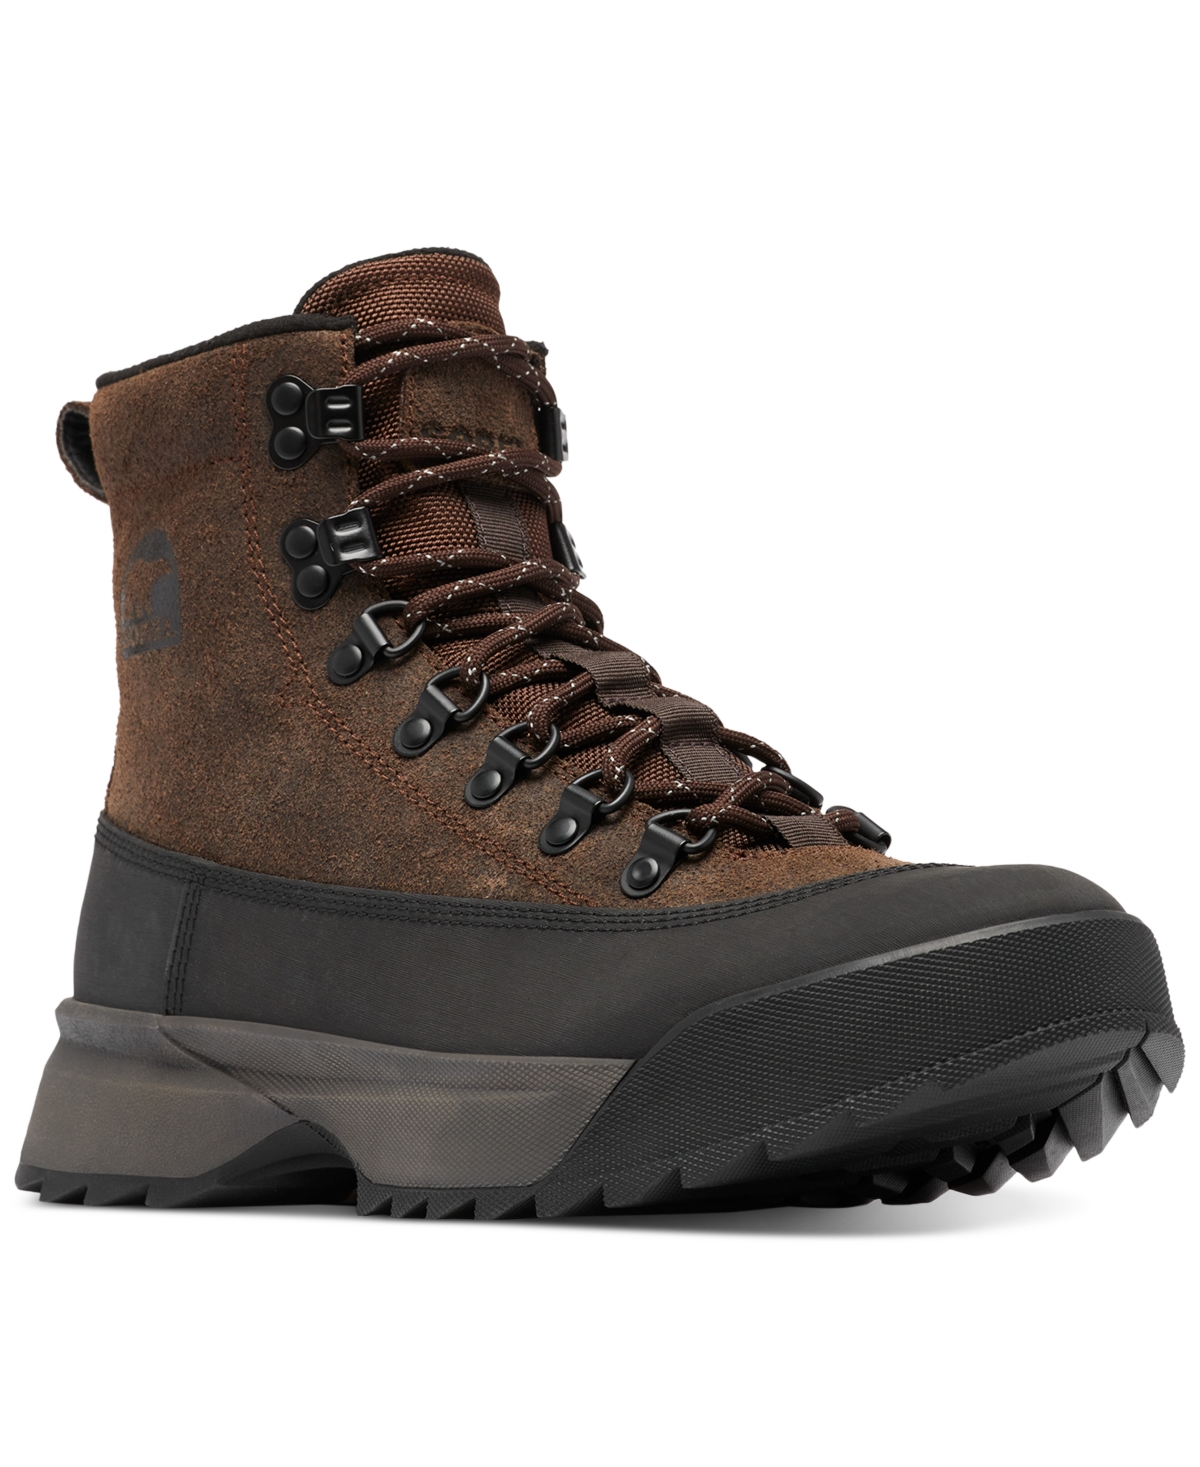 Men's Scout Pro Waterproof Boots - Black, Black